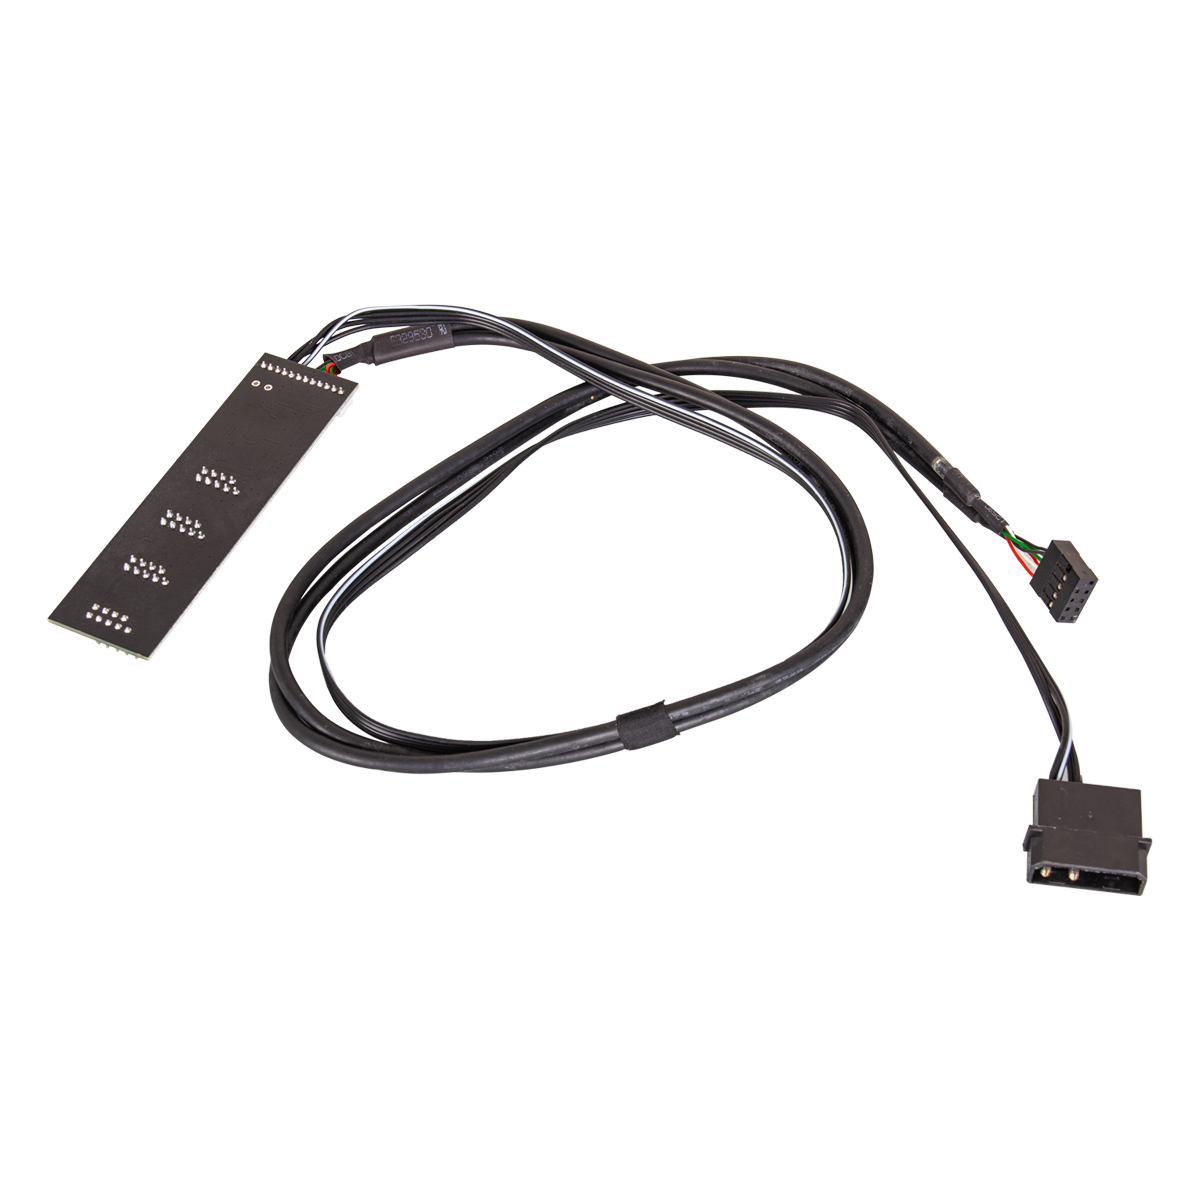 Kolink - Kolink Internal USB Hub - 60cm USB Cable